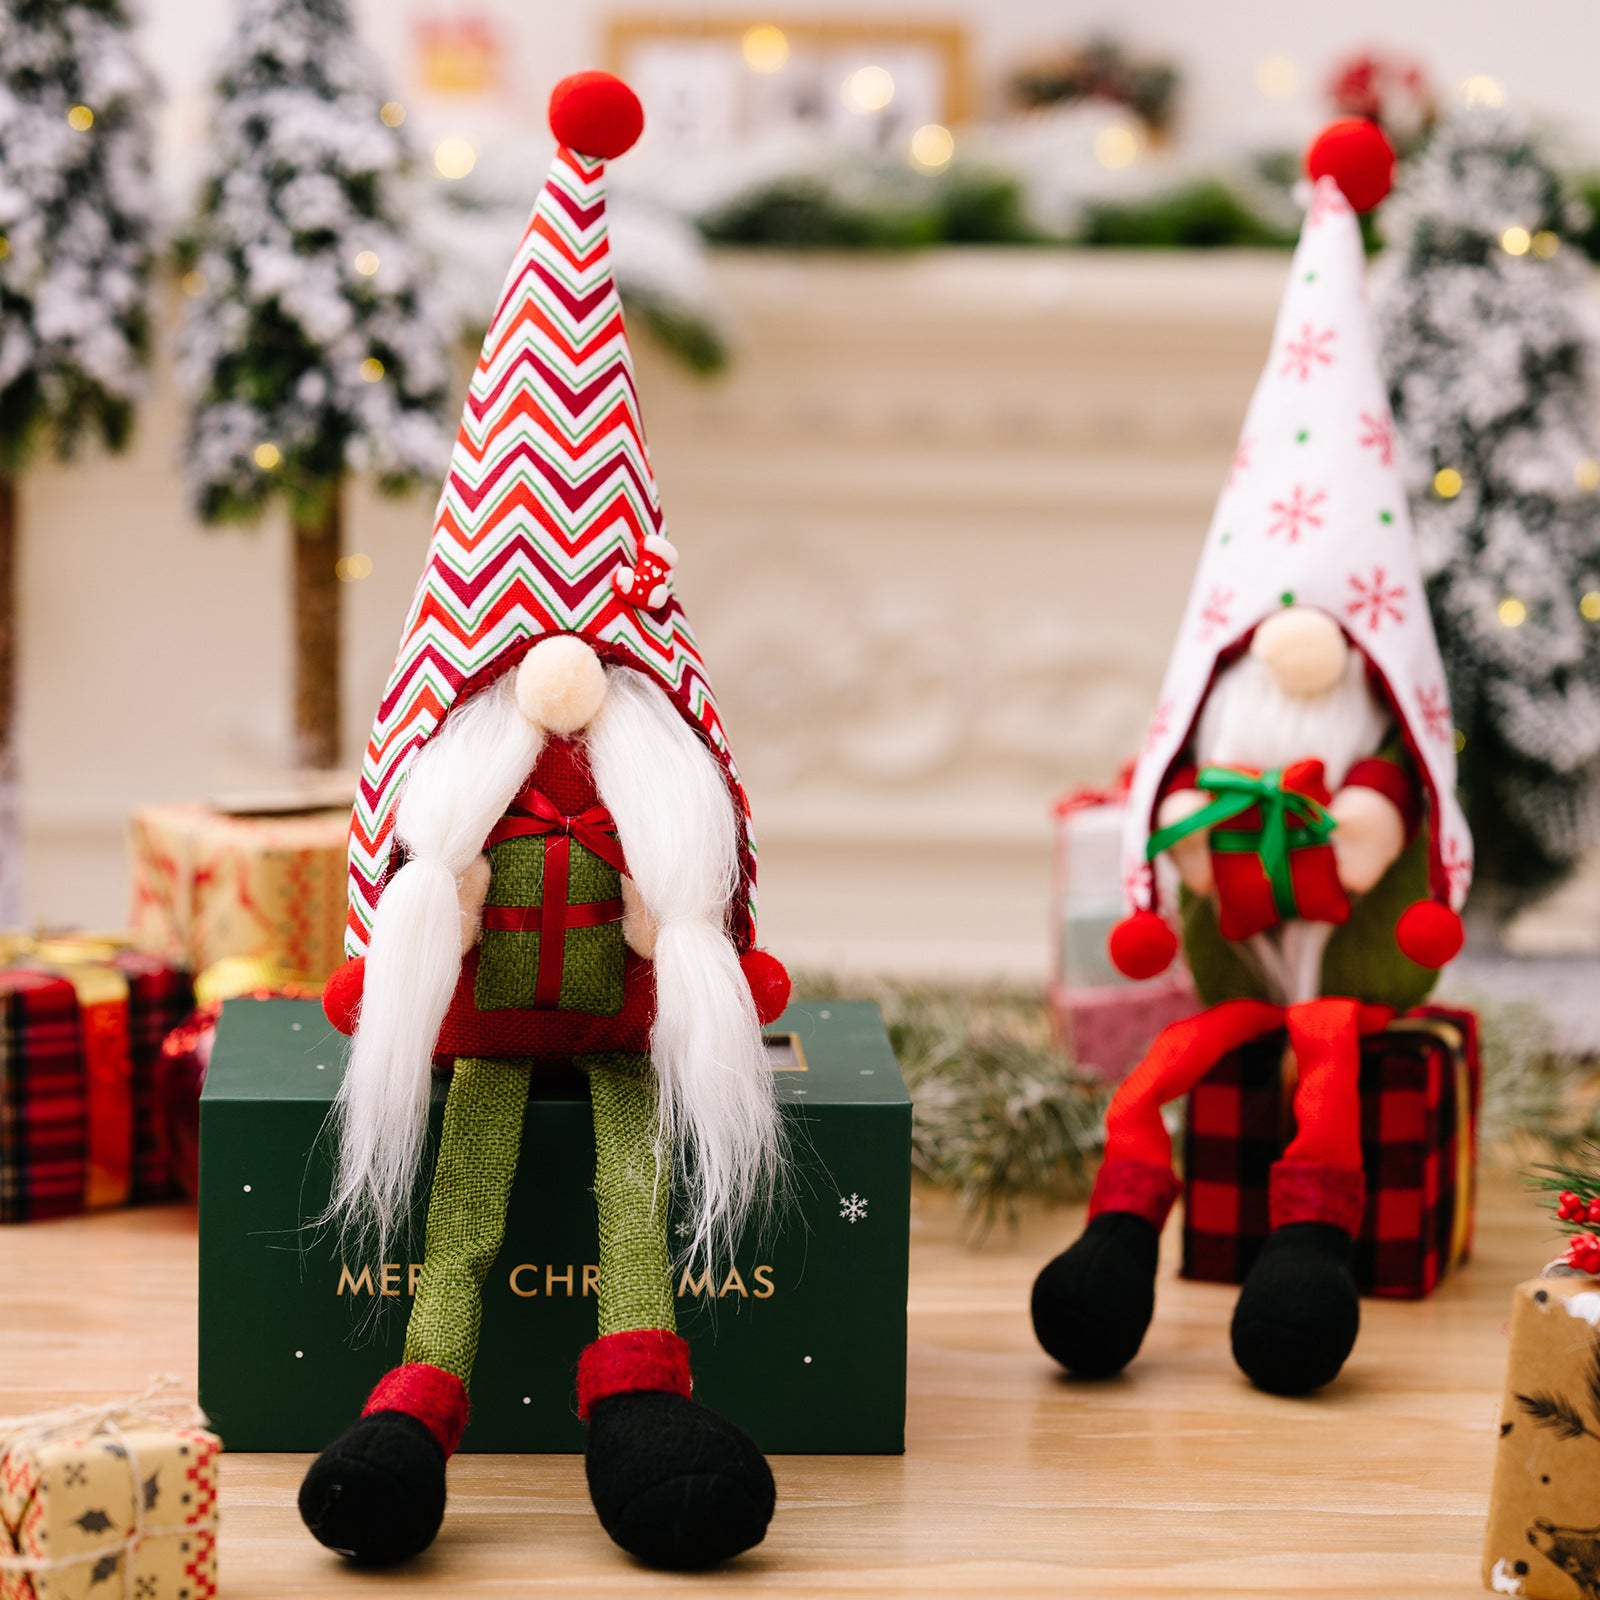 Christmas pointed hat long legg gnomes holding gift box